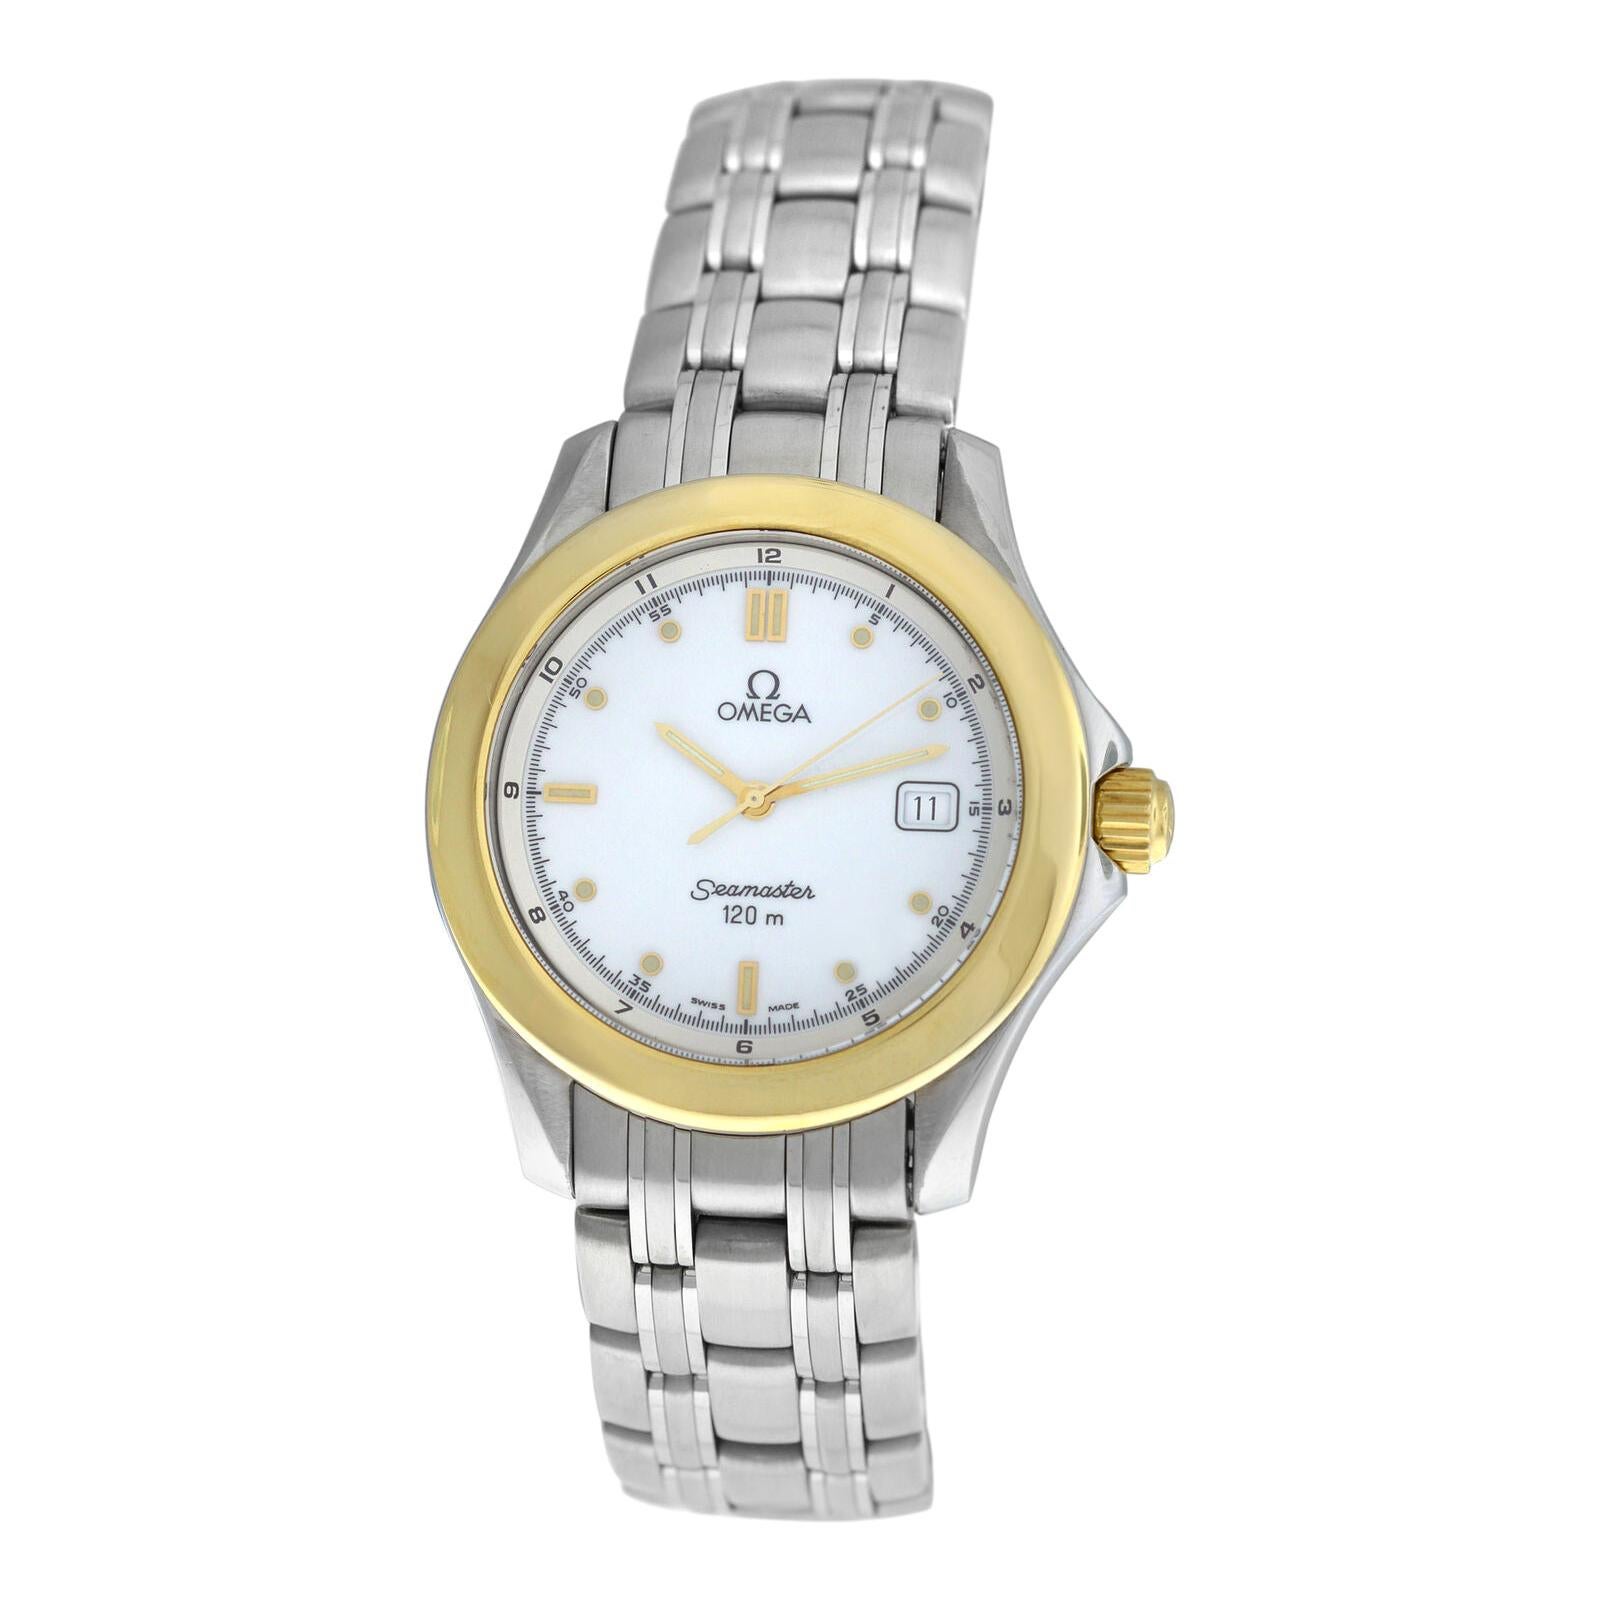 Unisex Omega Seamaster 196.1501 396.1501 120M Gold Steel Quartz Watch